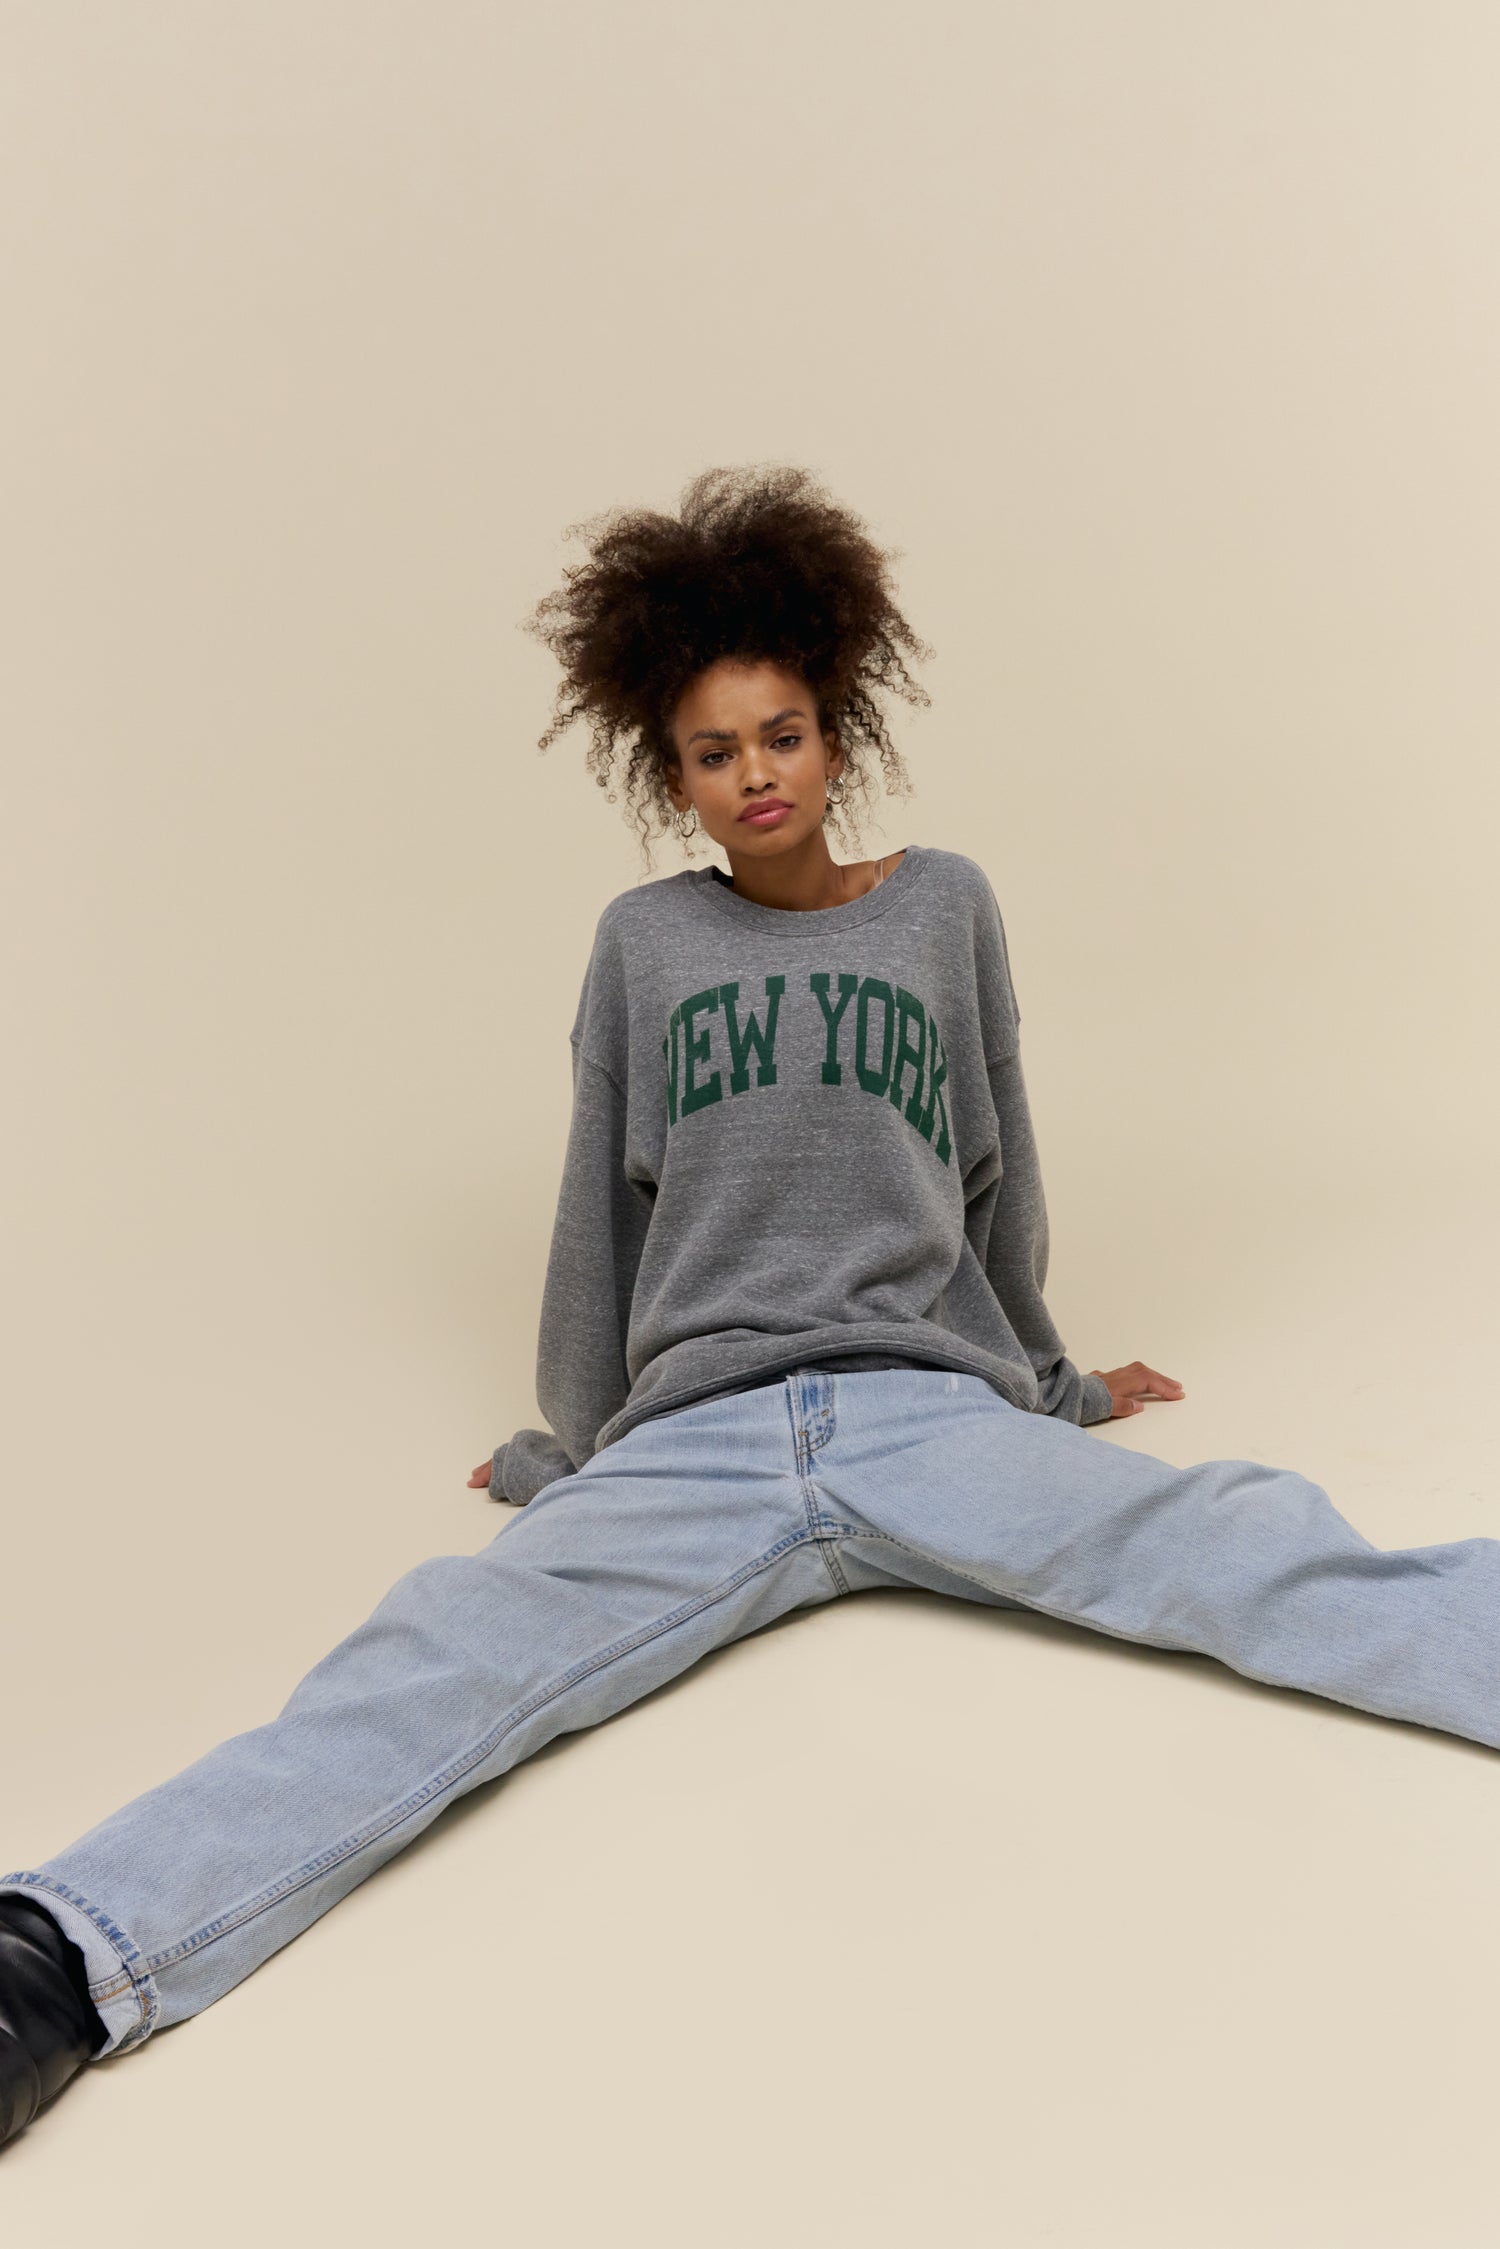 Model wearing a 'New York' collegiate style heather grey sweatshirt in a soft tri-blend fleece